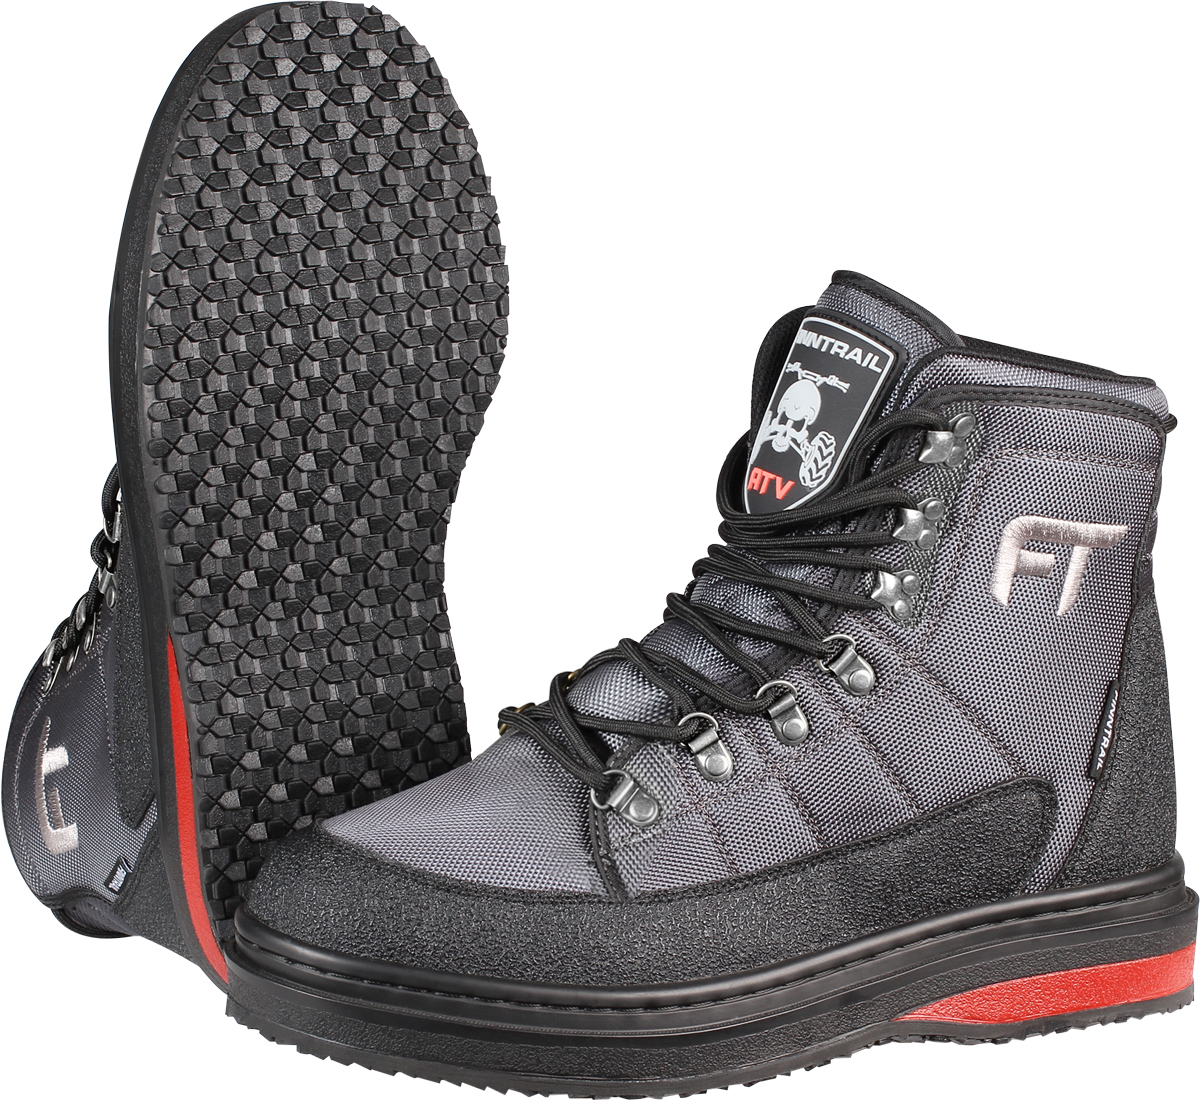 Ботинки для рыбалки Finntrail Runner, цвет: серый, черный, красный. 5221. Размер 46